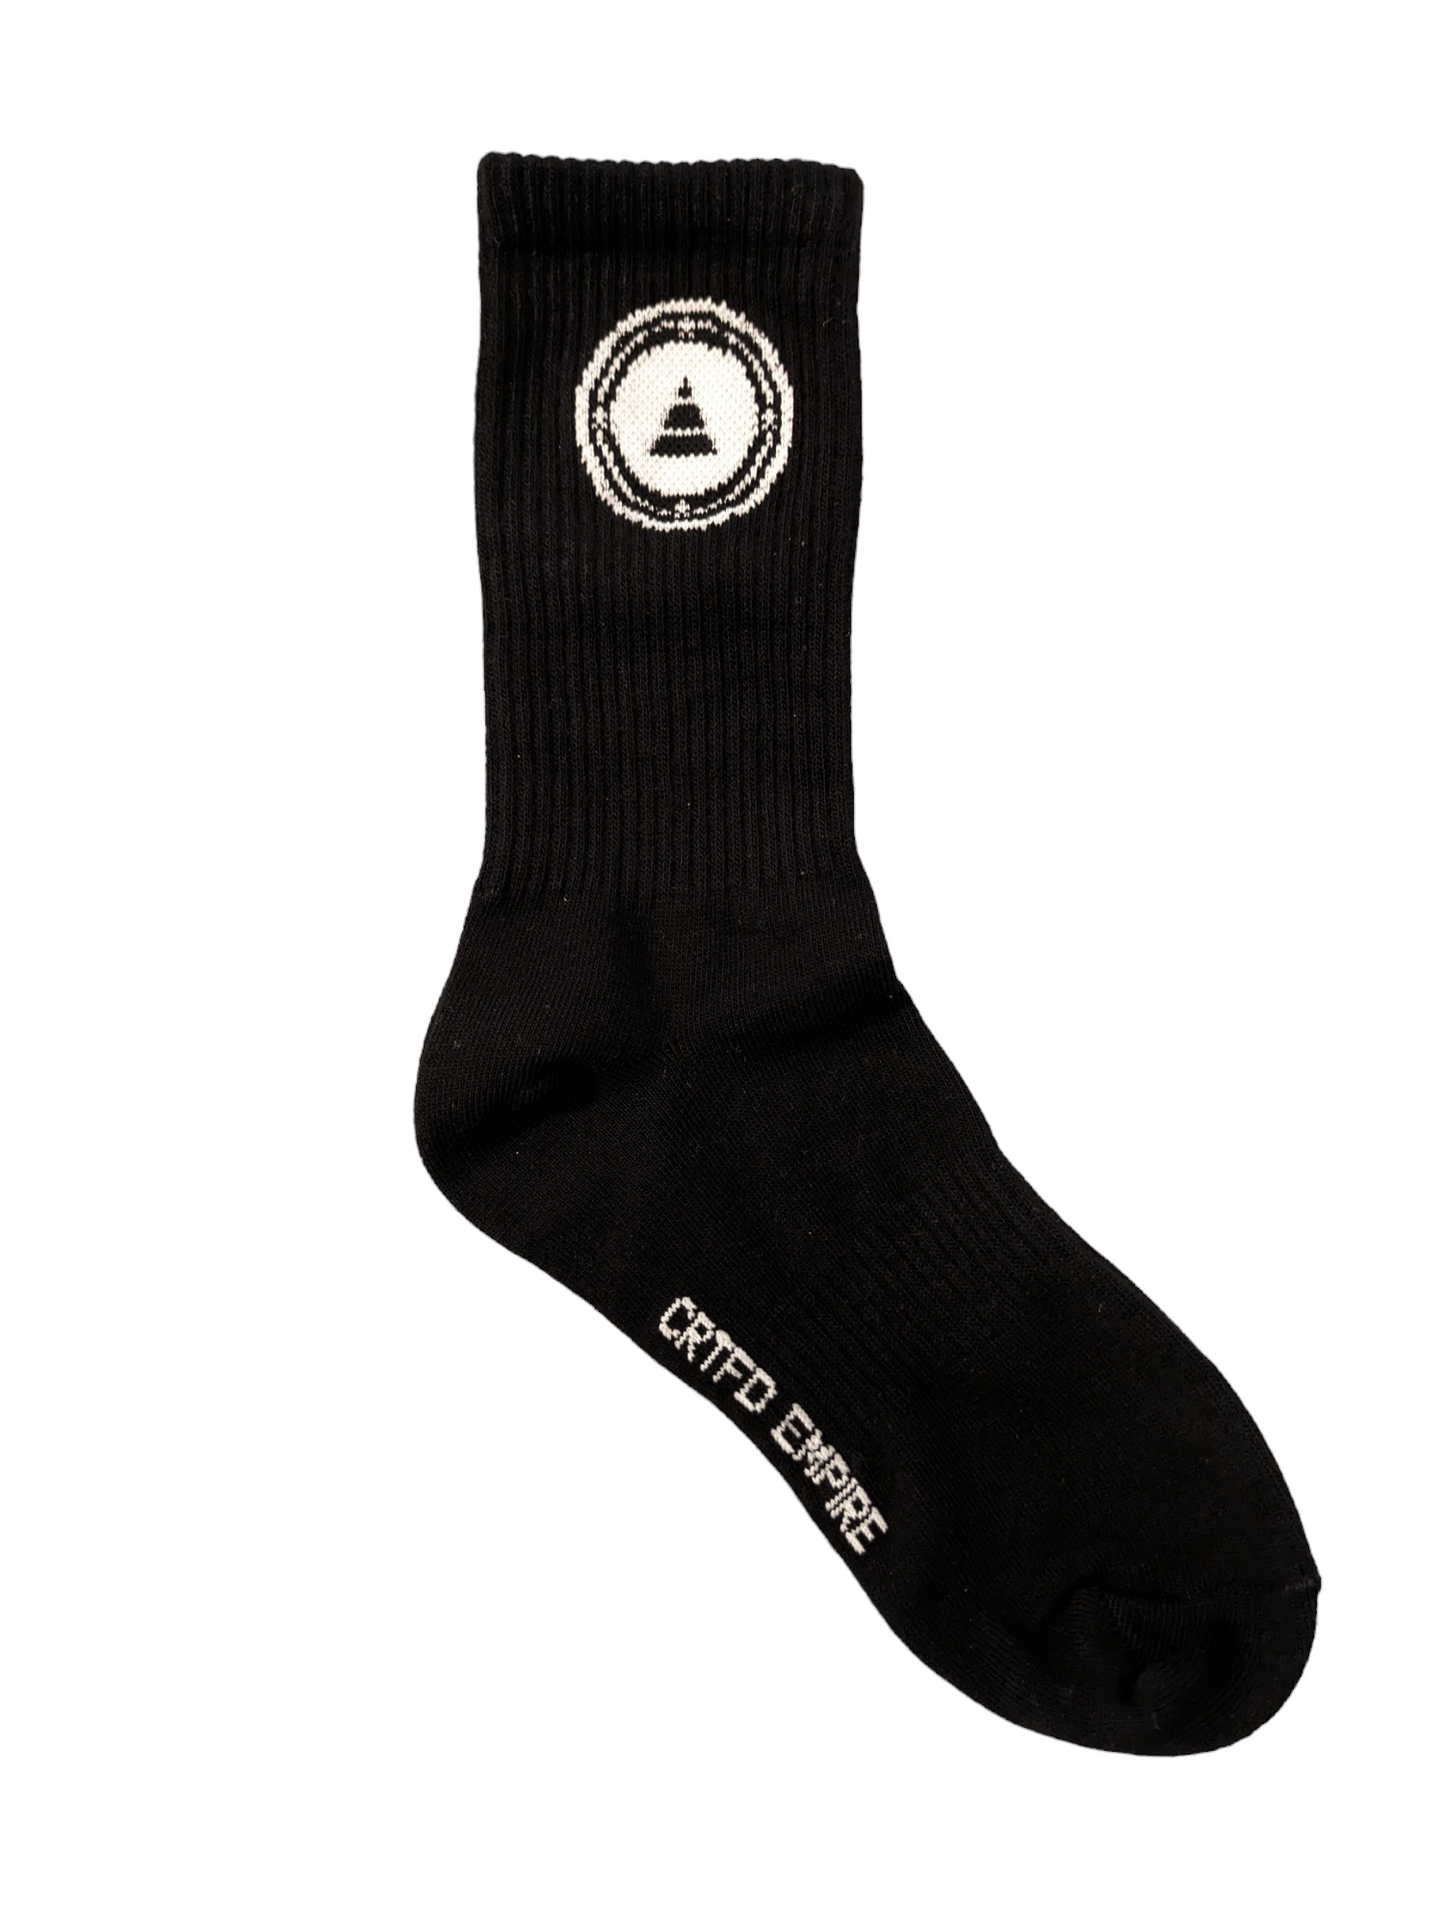 Crew socks (Black)